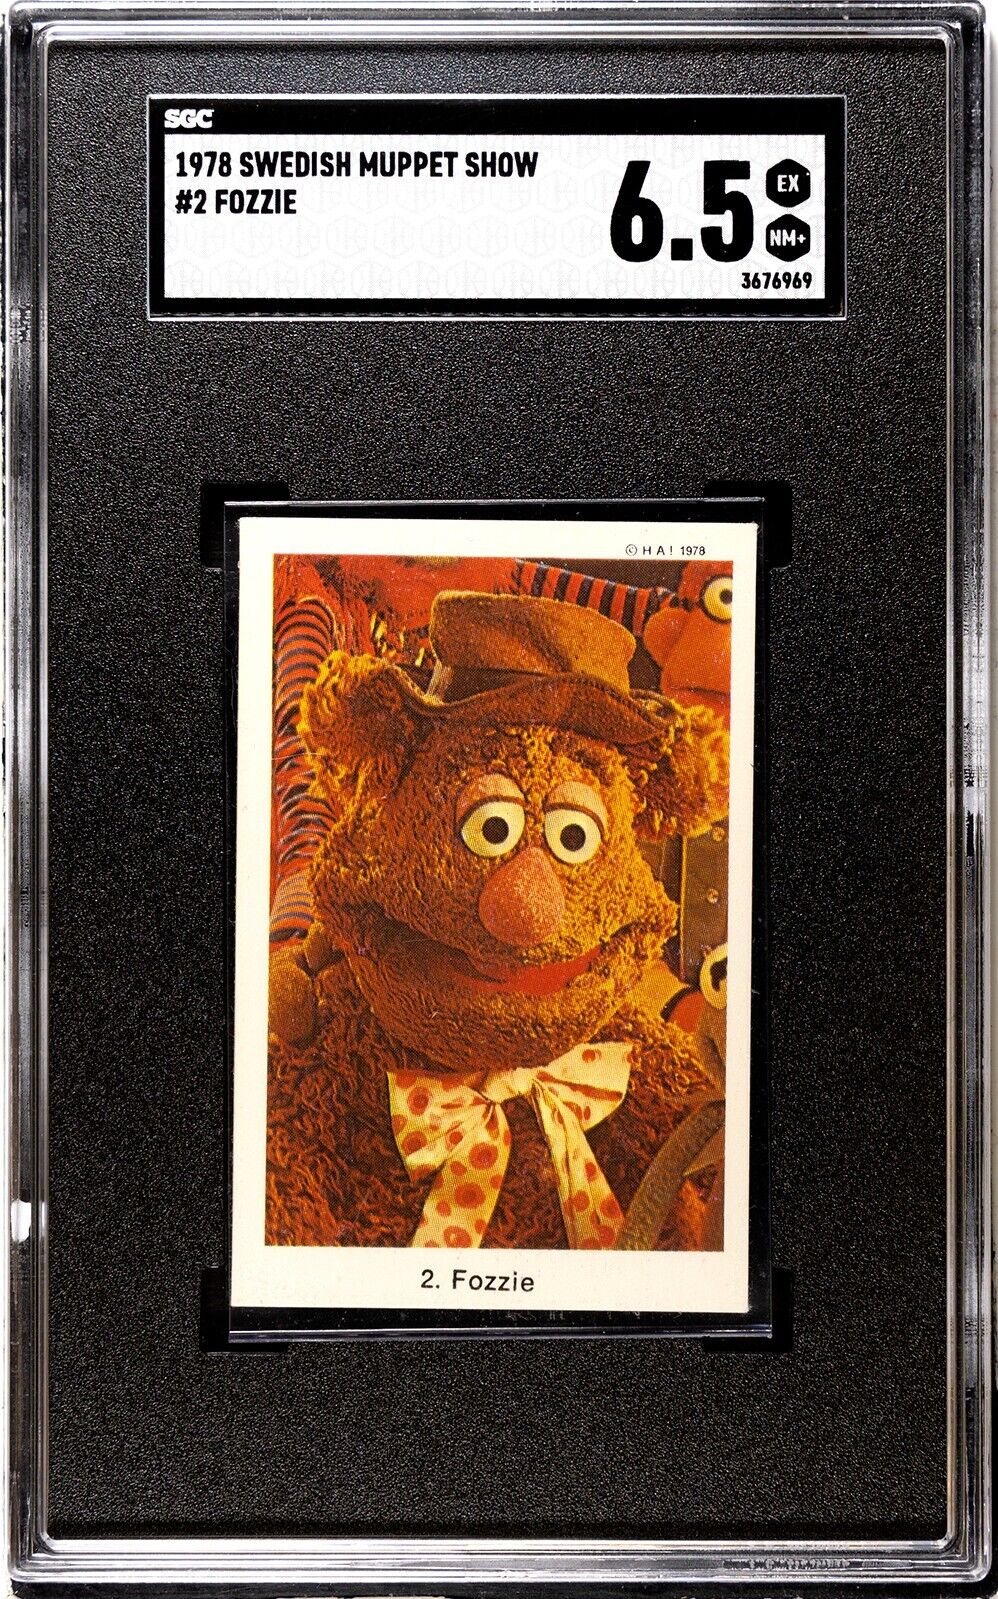 1978 Swedish Samlarsaker Muppet Show #2 Fozzie SGC 6.5